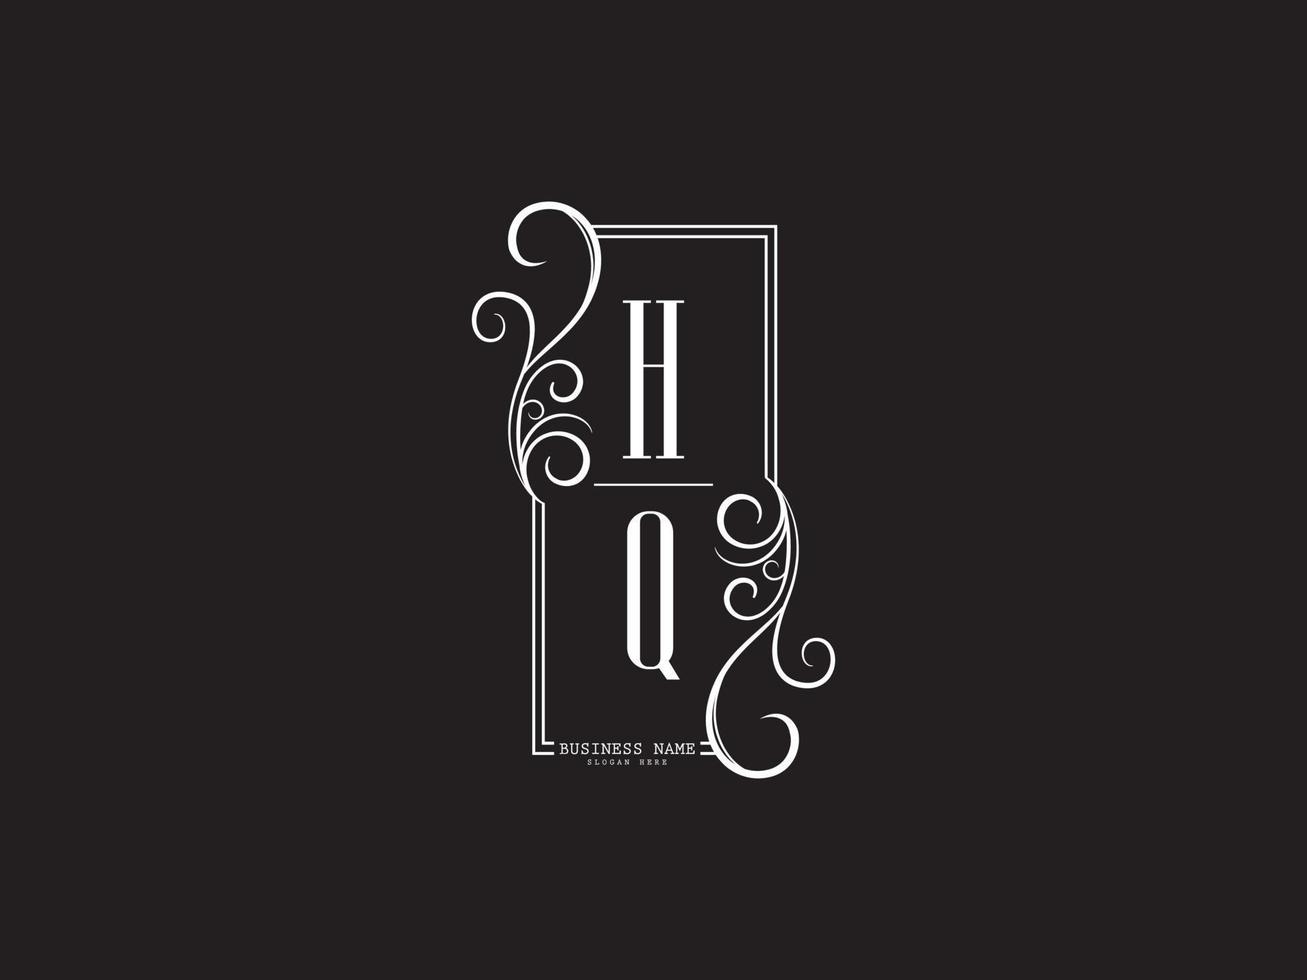 design minimalista de imagem vetorial de letra de logotipo de luxo hq qh vetor